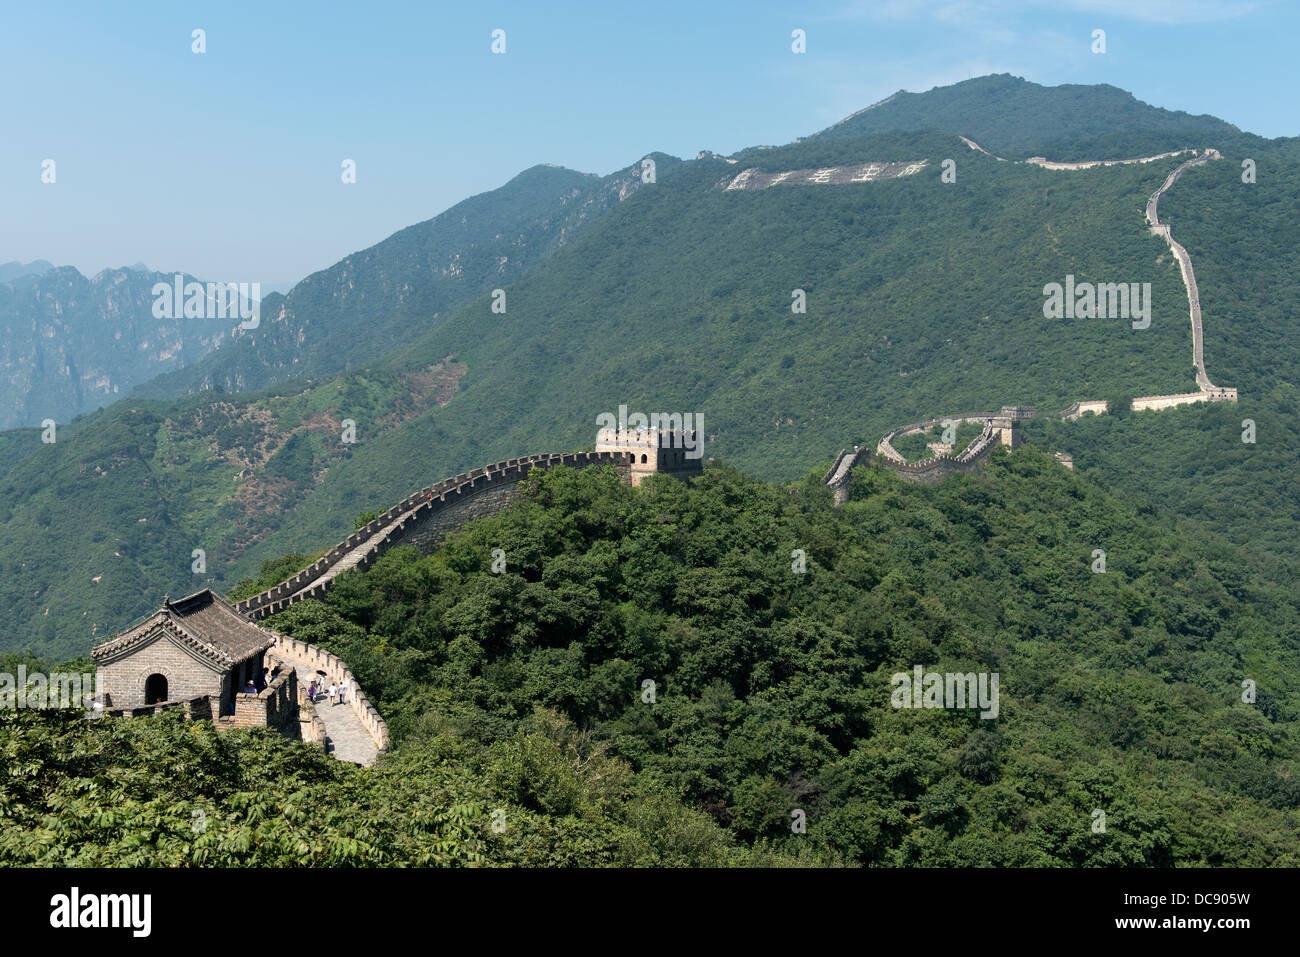 The Great Wall of China; Beijing, China Stock Photo